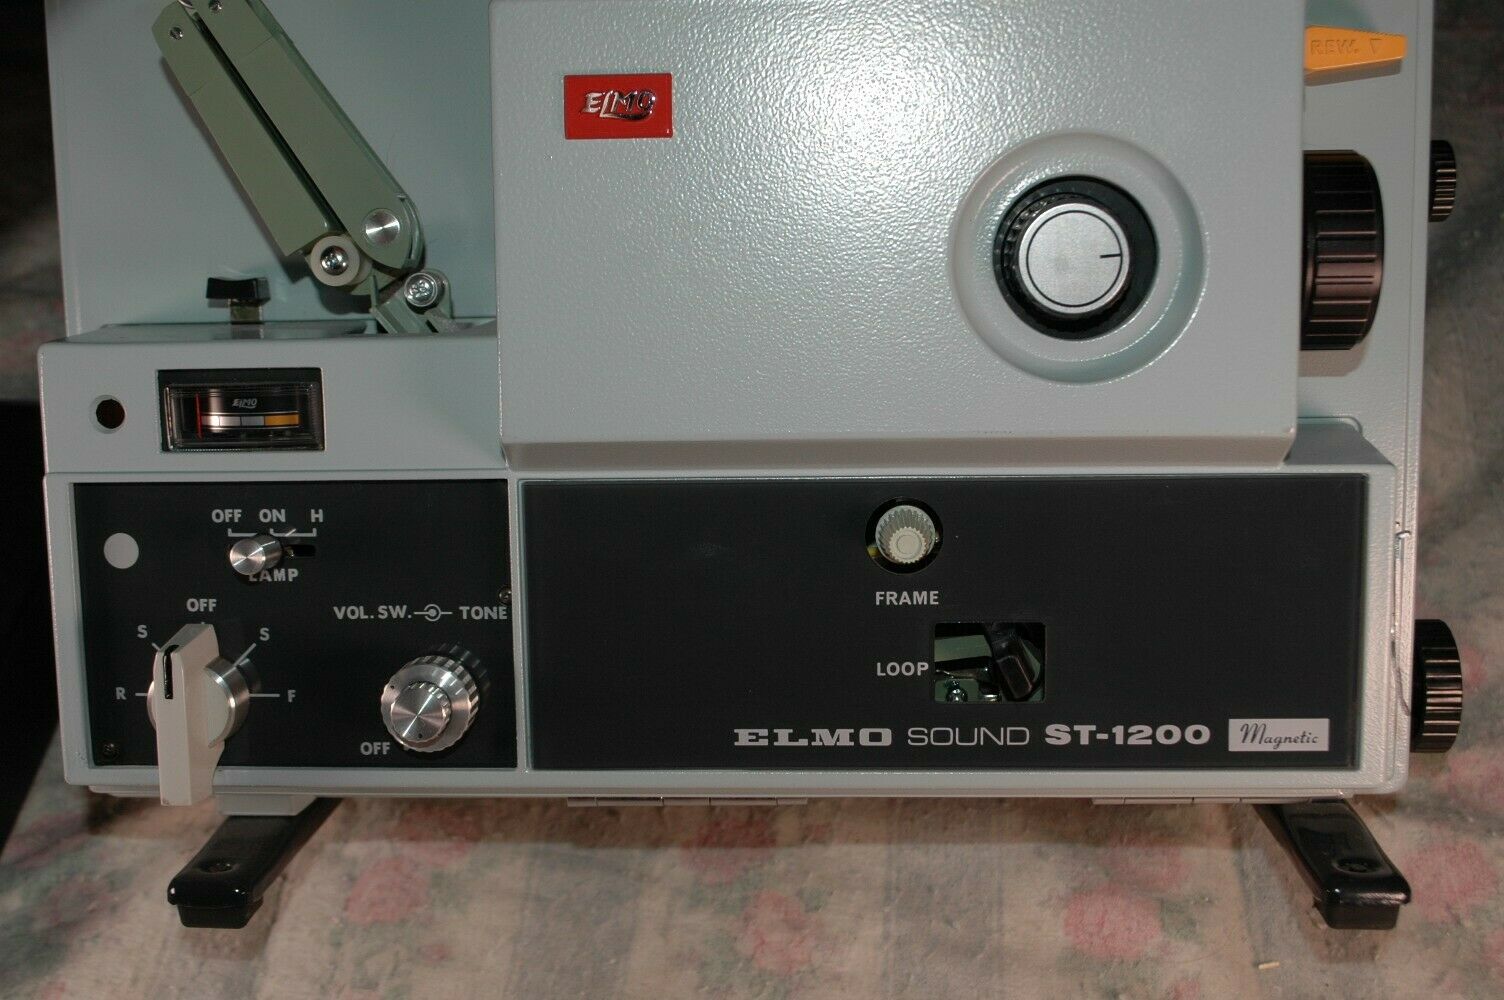 Elmo St 1200 Hd Sound Projector Excellent Condition In Original Case W/ Extras